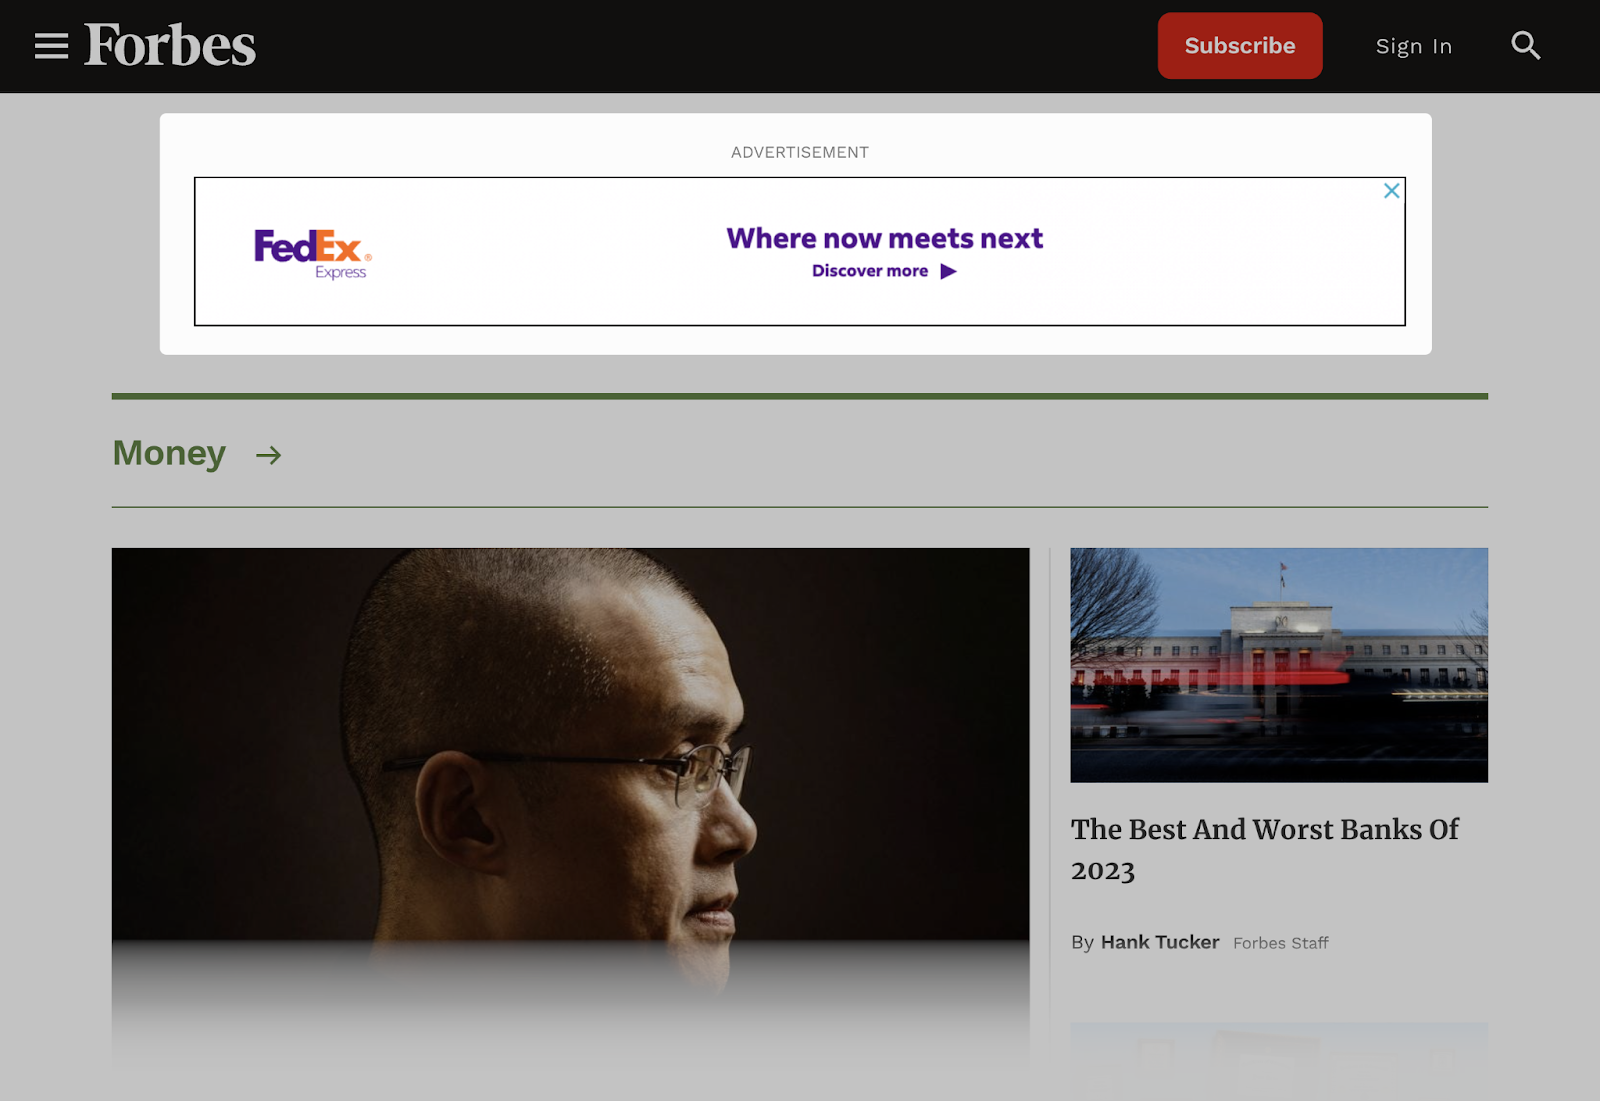 FedEx display ad on the GDN